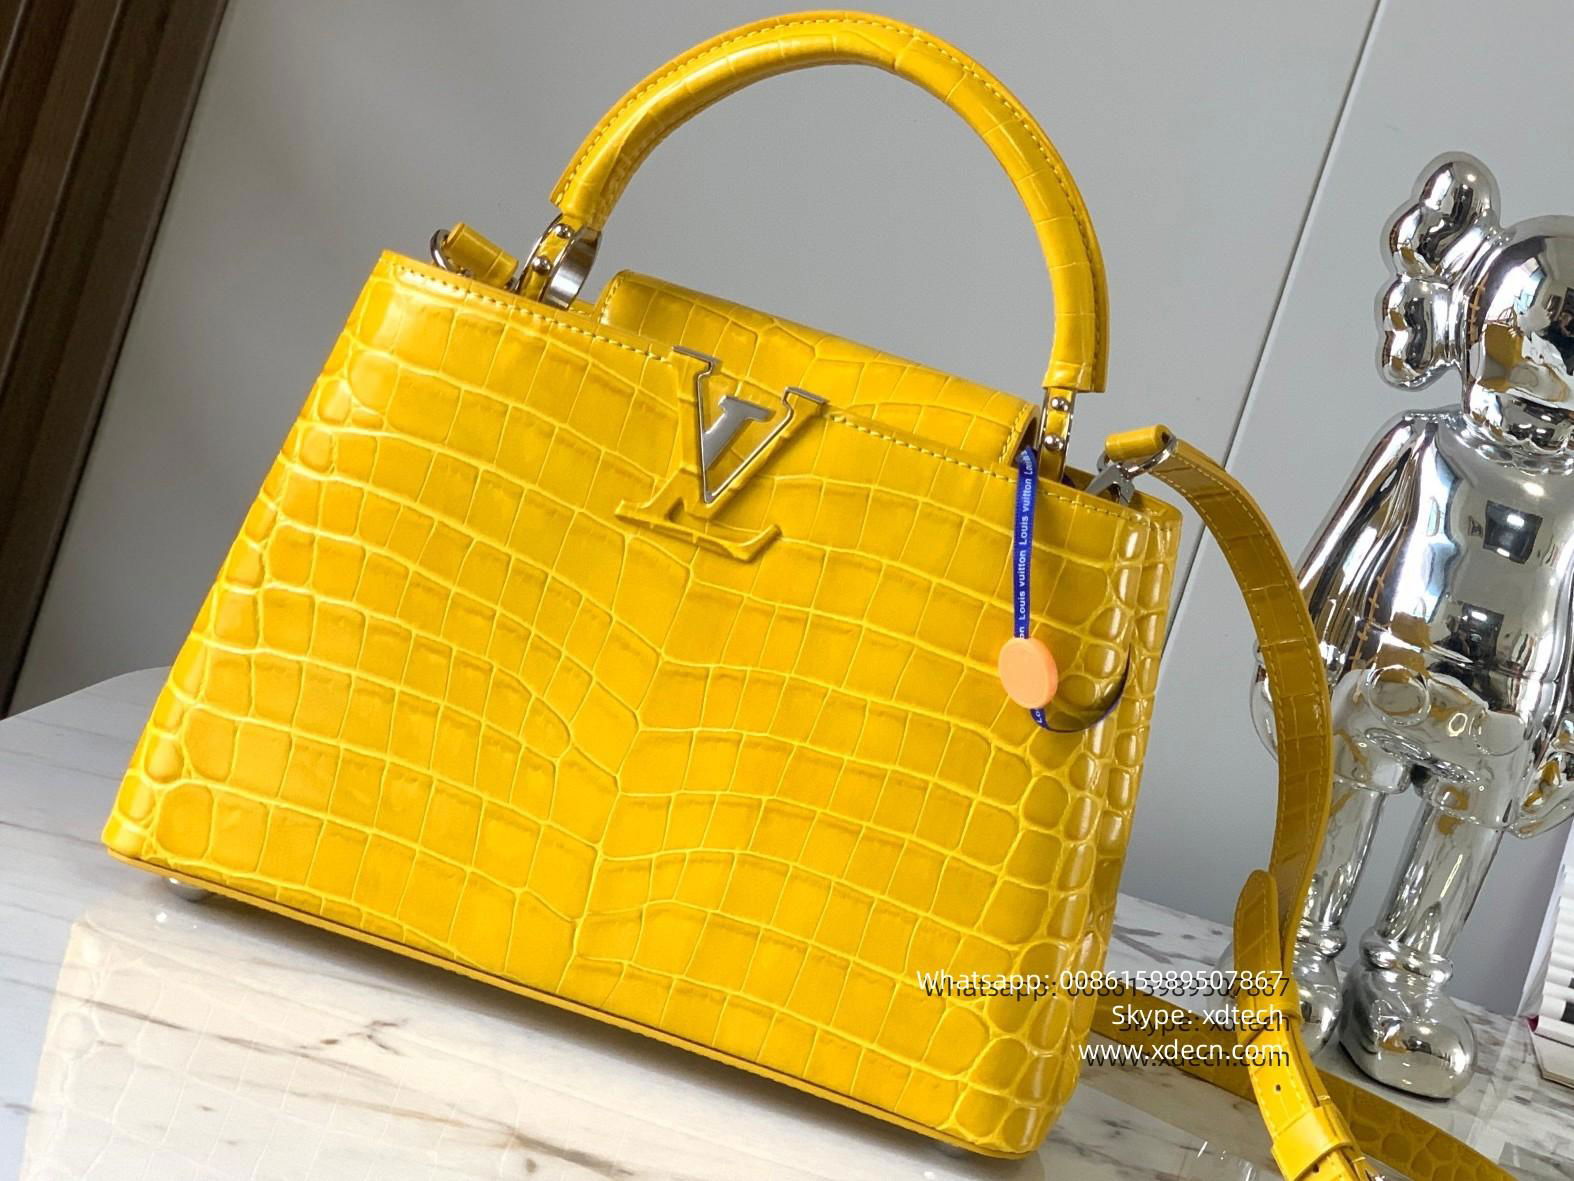 1:1 Clone Louis Vuitton Capucines Different Colors Different Sizes Avaliable